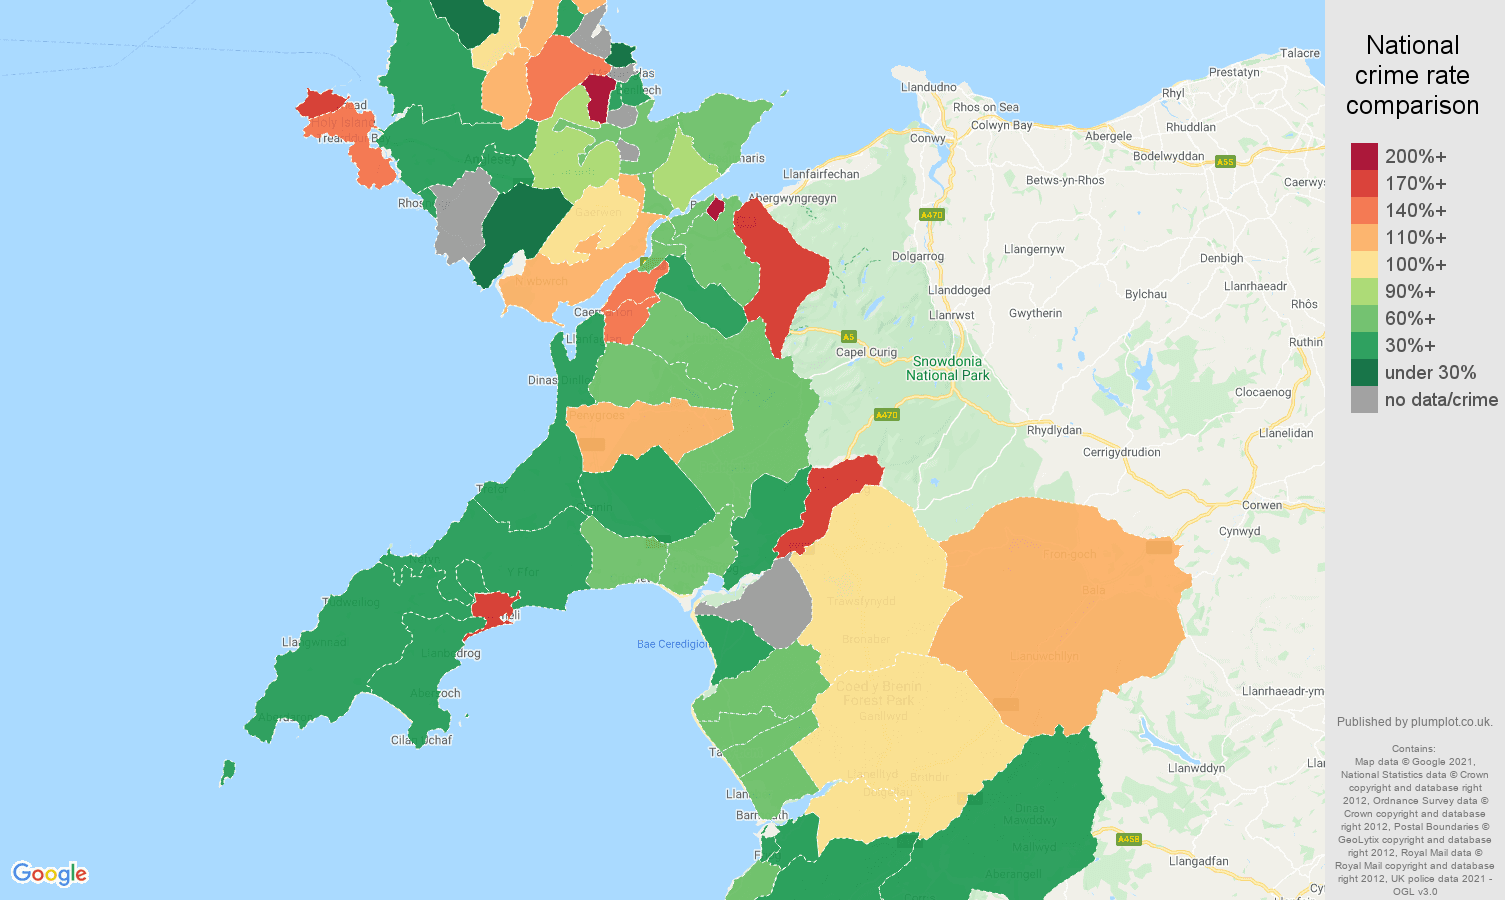 Gwynedd criminal damage and arson crime rate comparison map